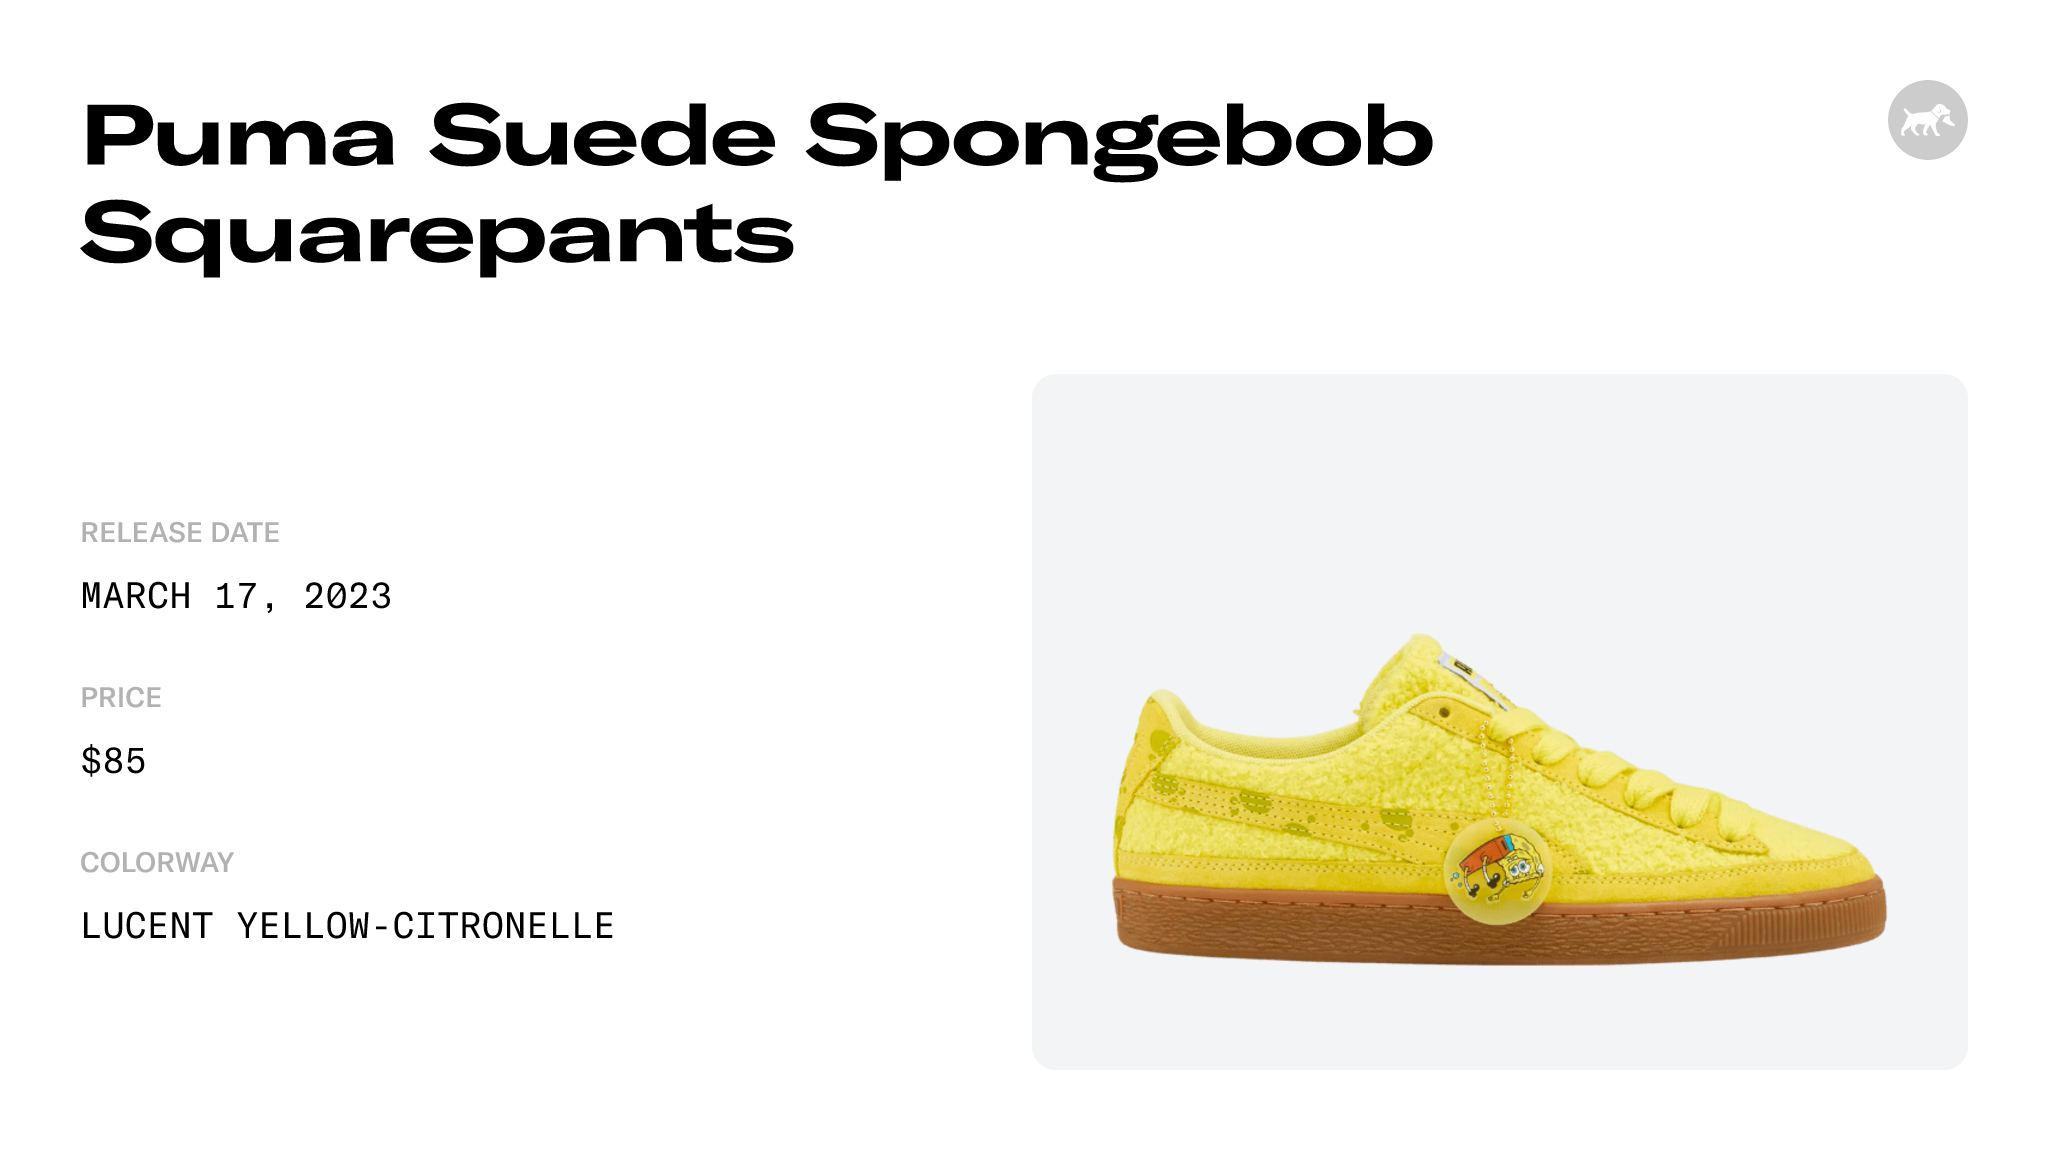 Puma Suede Spongebob Squarepants Raffles and Release Date | Sole